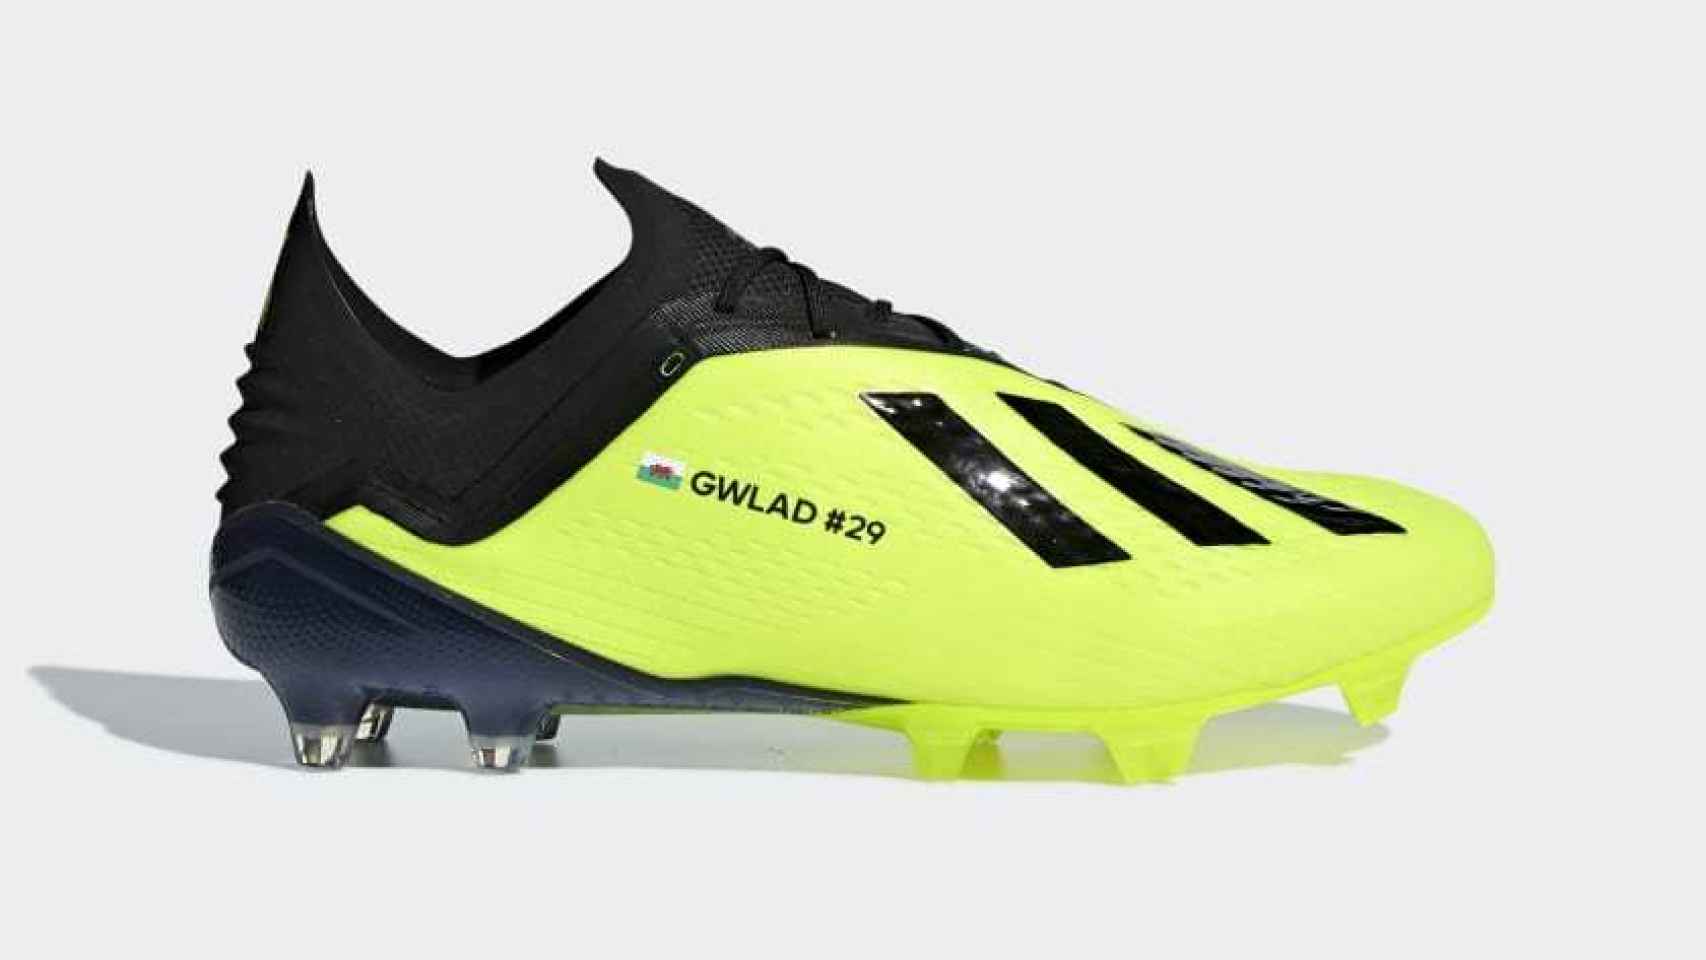 Botas edición limitada de Gareth Bale. Foto: adidas.co.uk